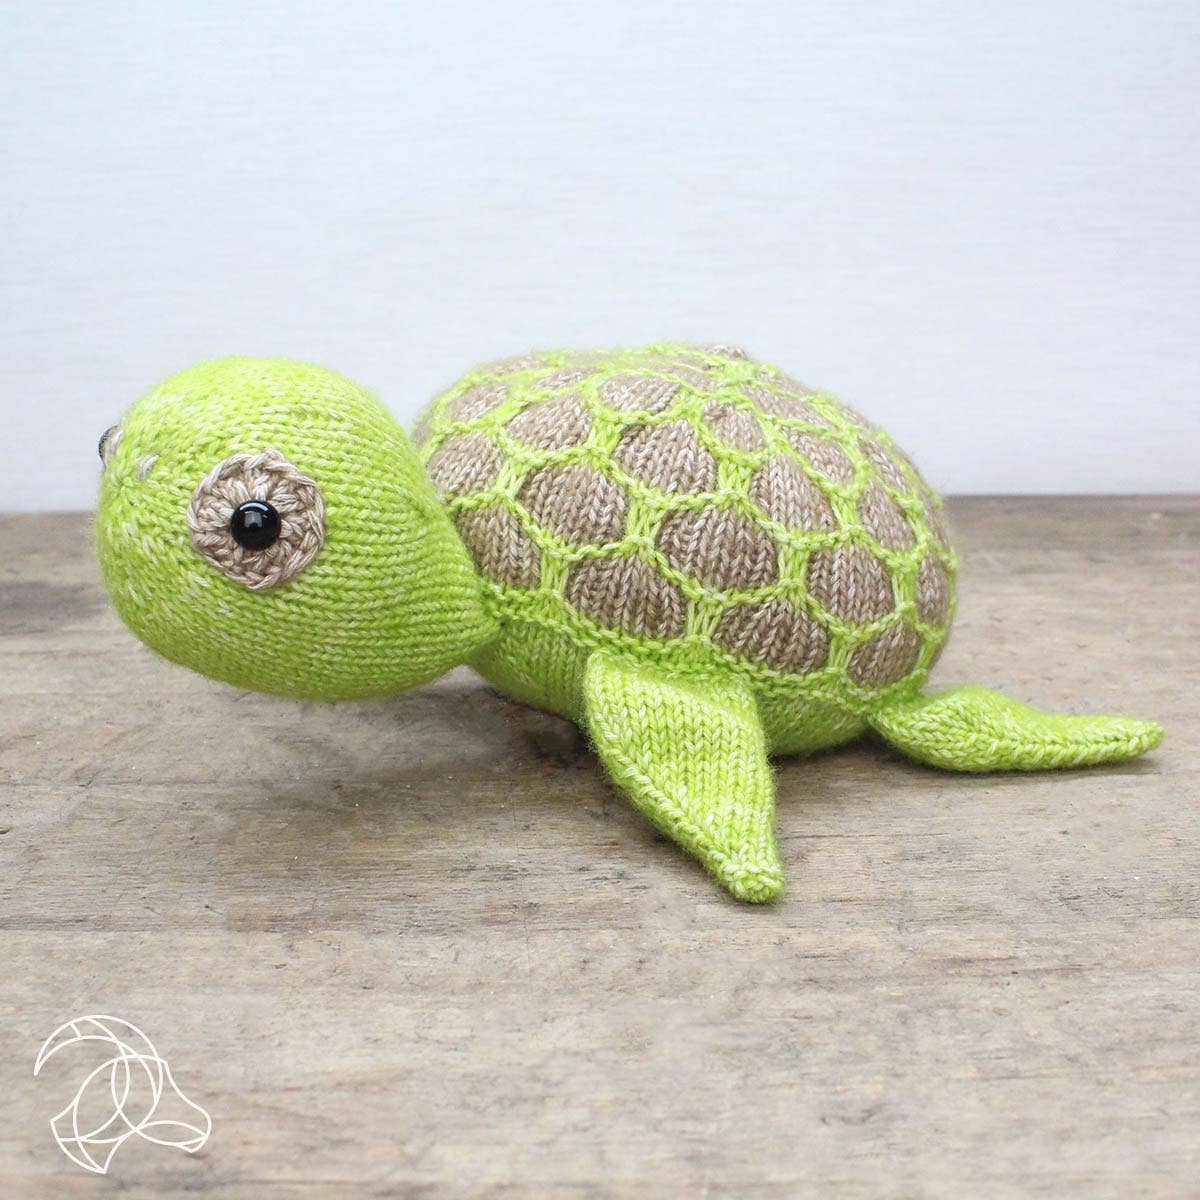 Hardicraft - DIY Knitting Kit - Ties Turtle